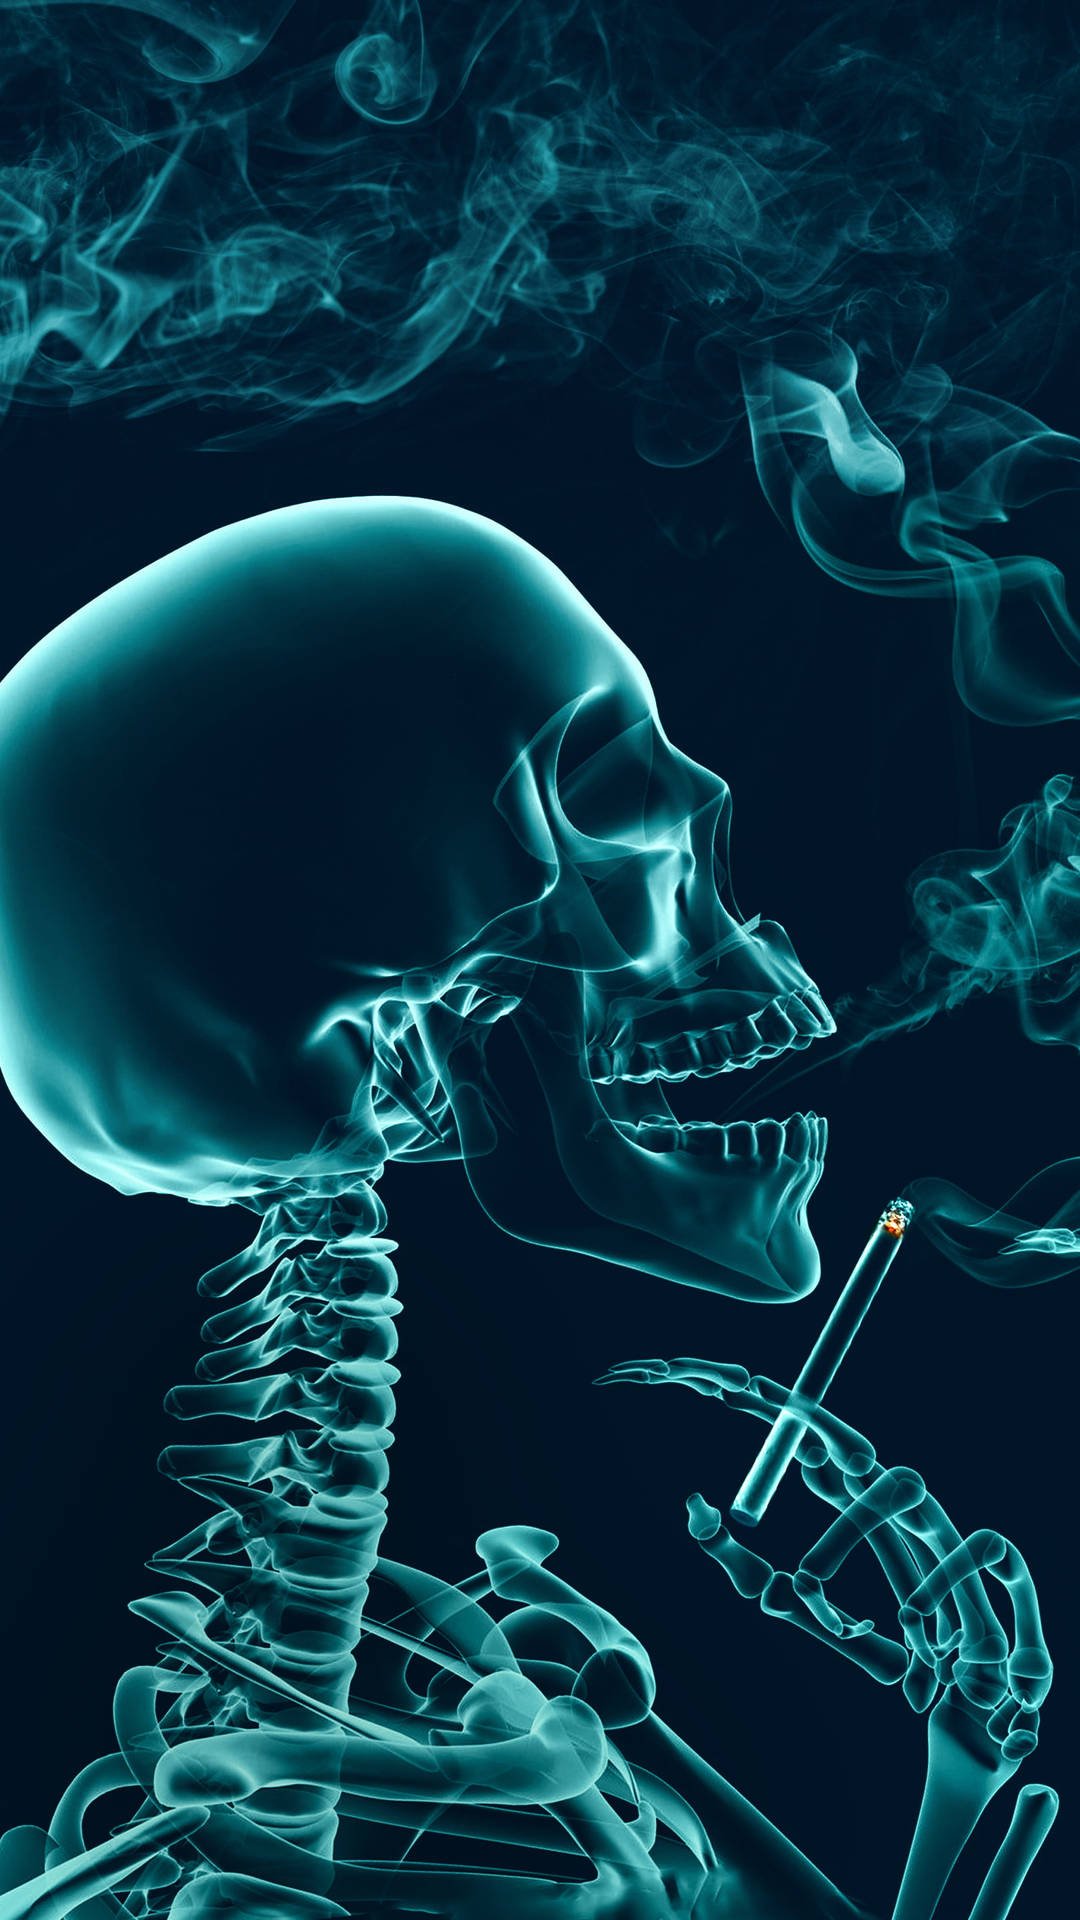 Download Skull Smoke Cigarette RoyaltyFree Stock Illustration Image   Pixabay